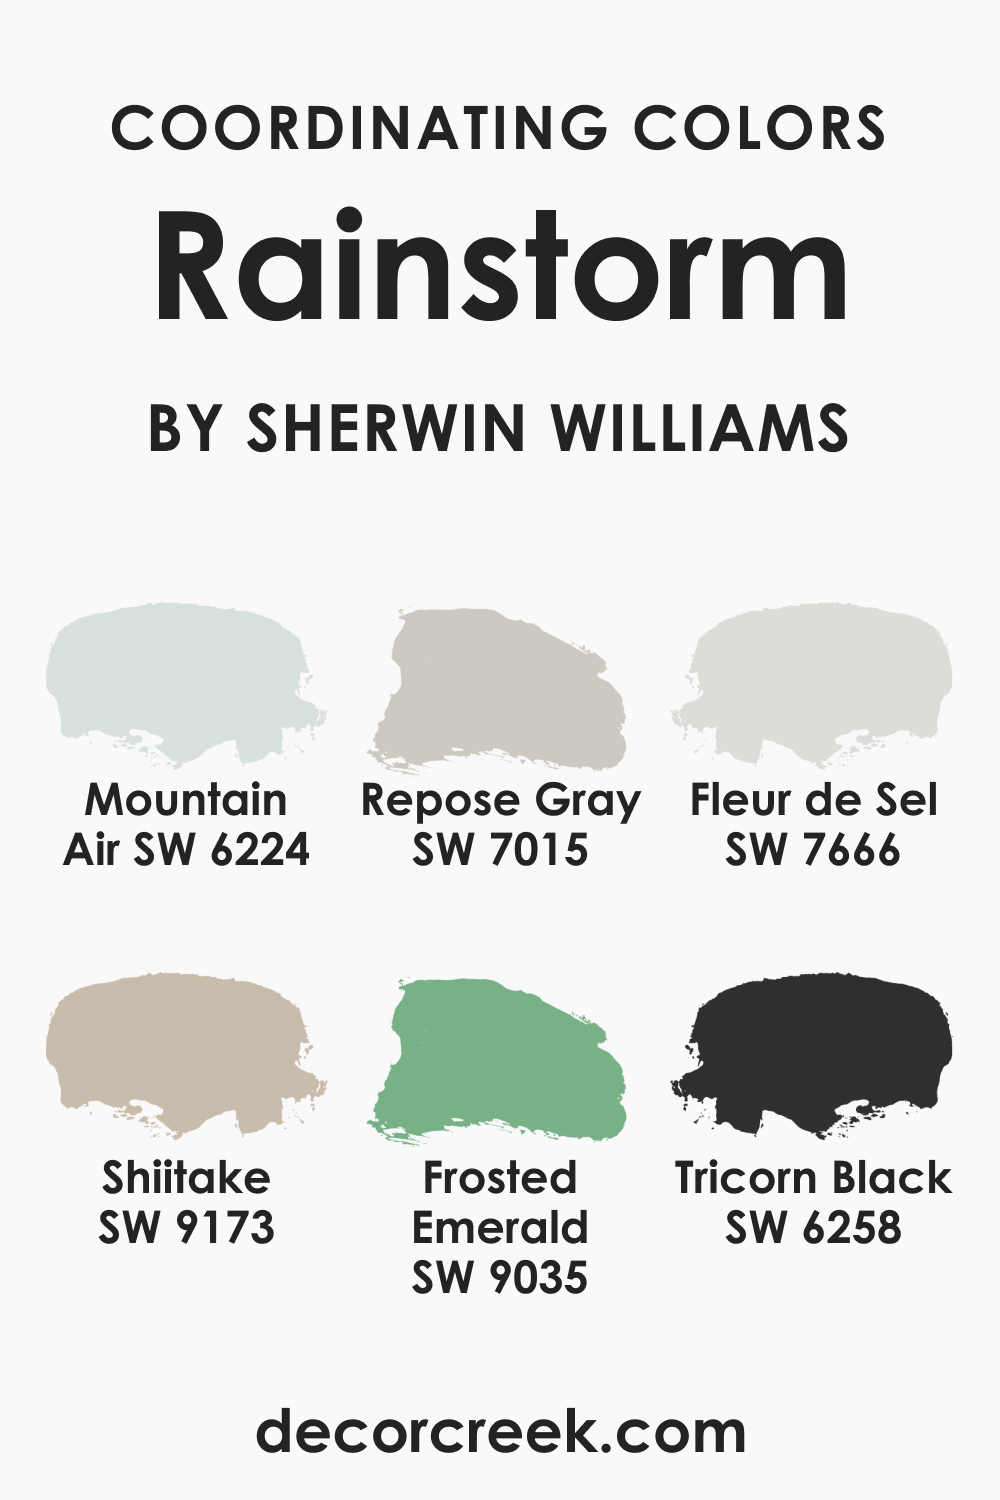 Coordinating Colors of SW 6230 Rainstorm